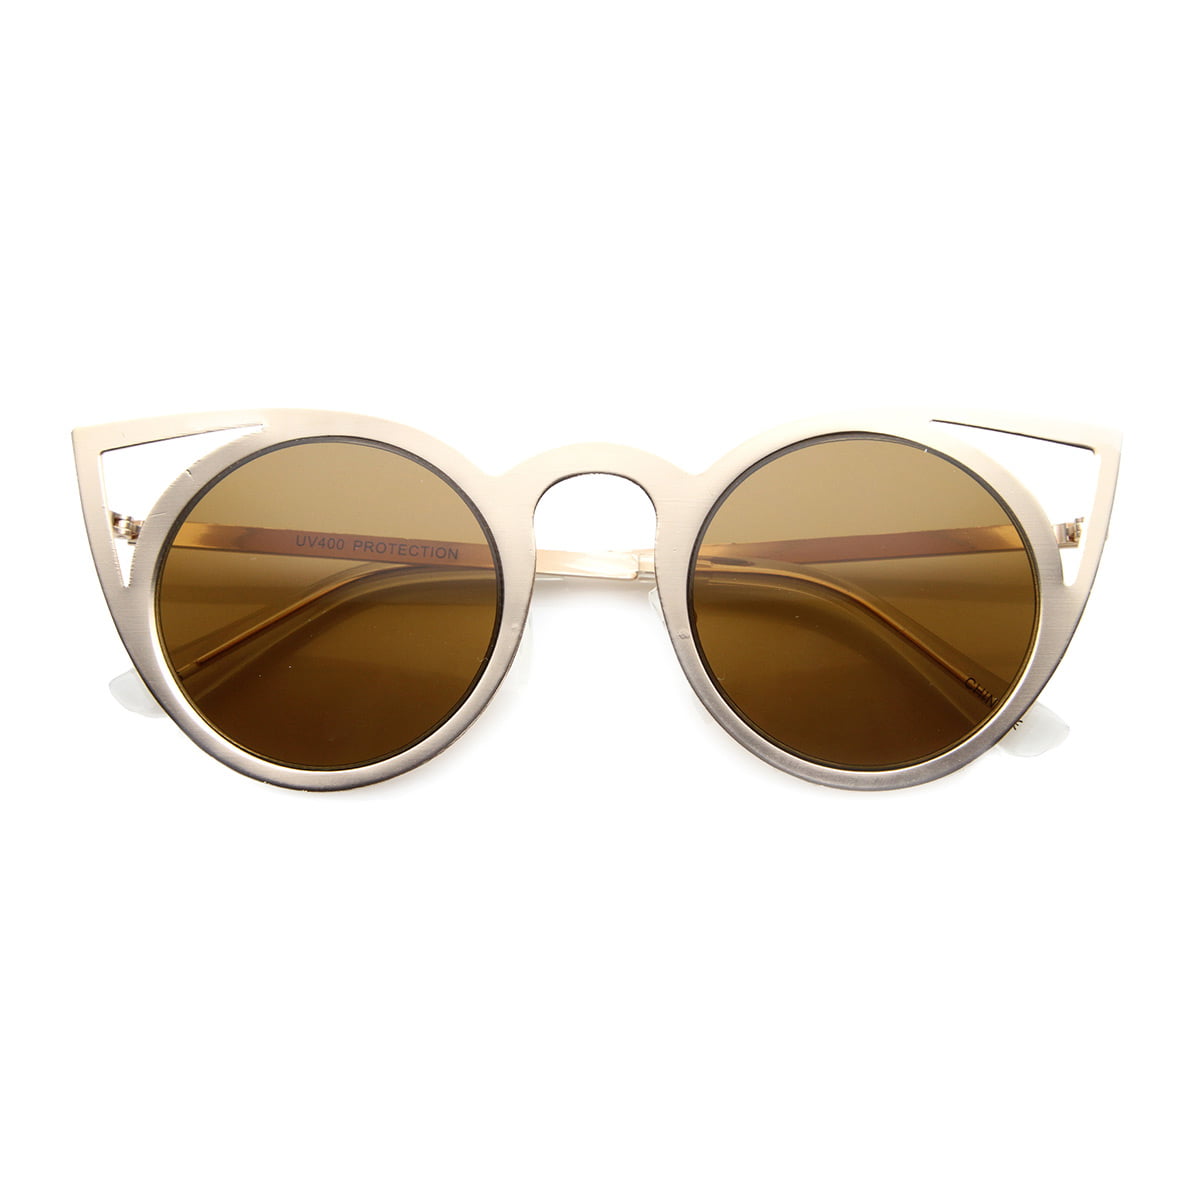 Super Cute Round Cateye Sunglasses Women's Fashion Shades 